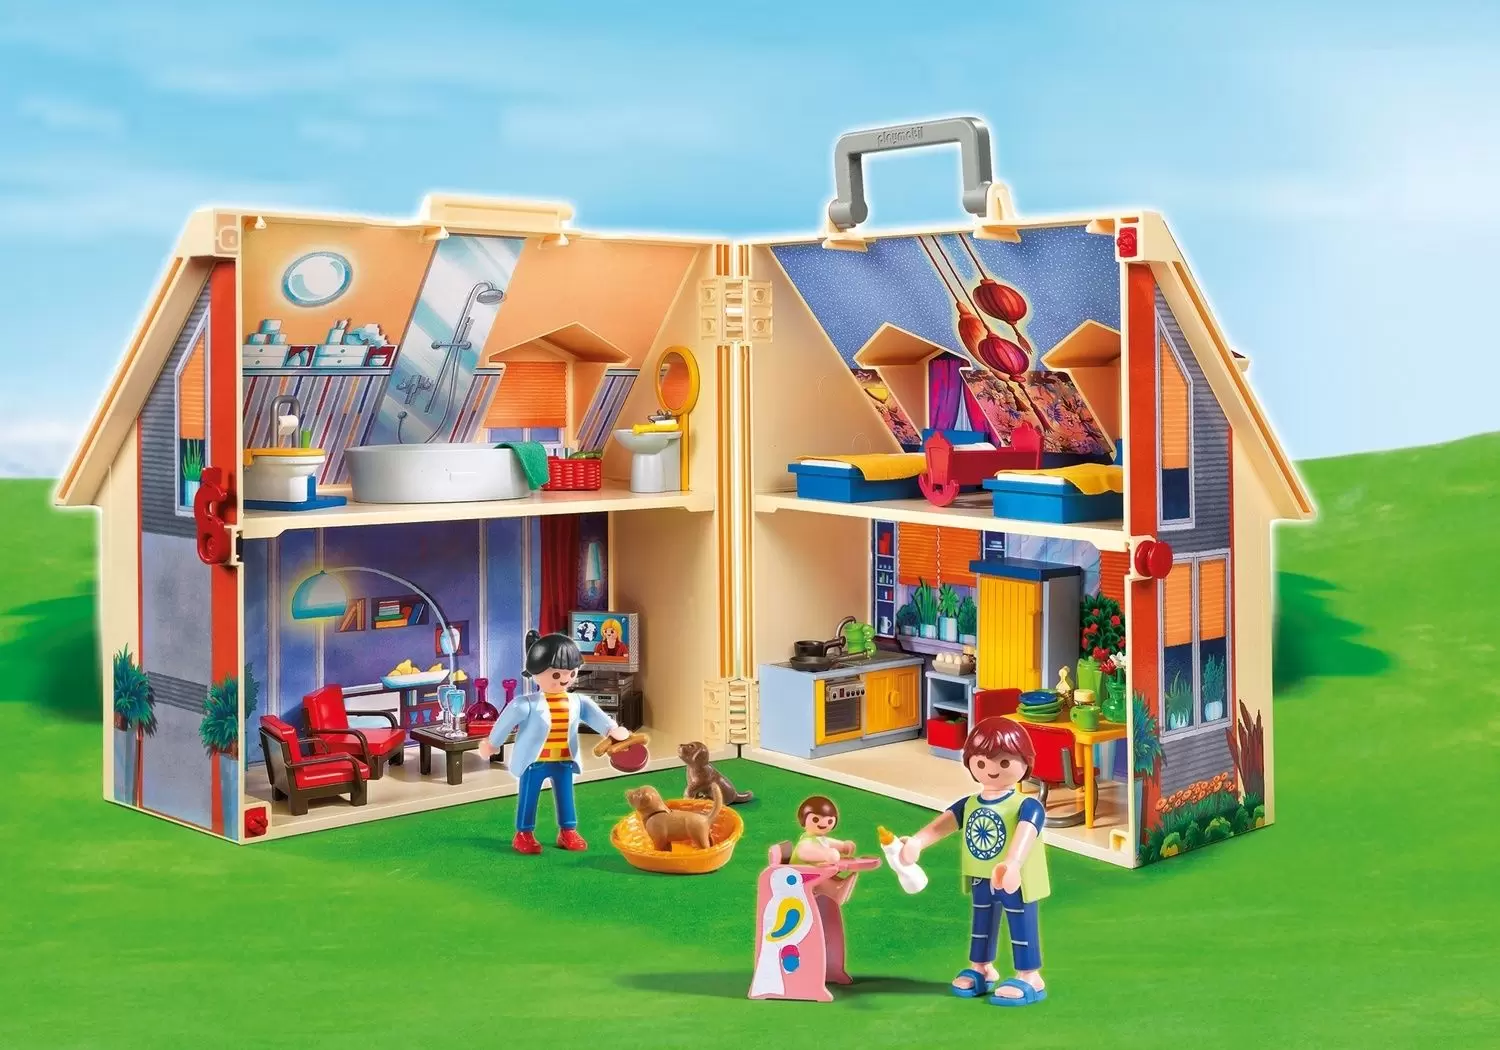 Maison transportable Playmobil - Playmobil